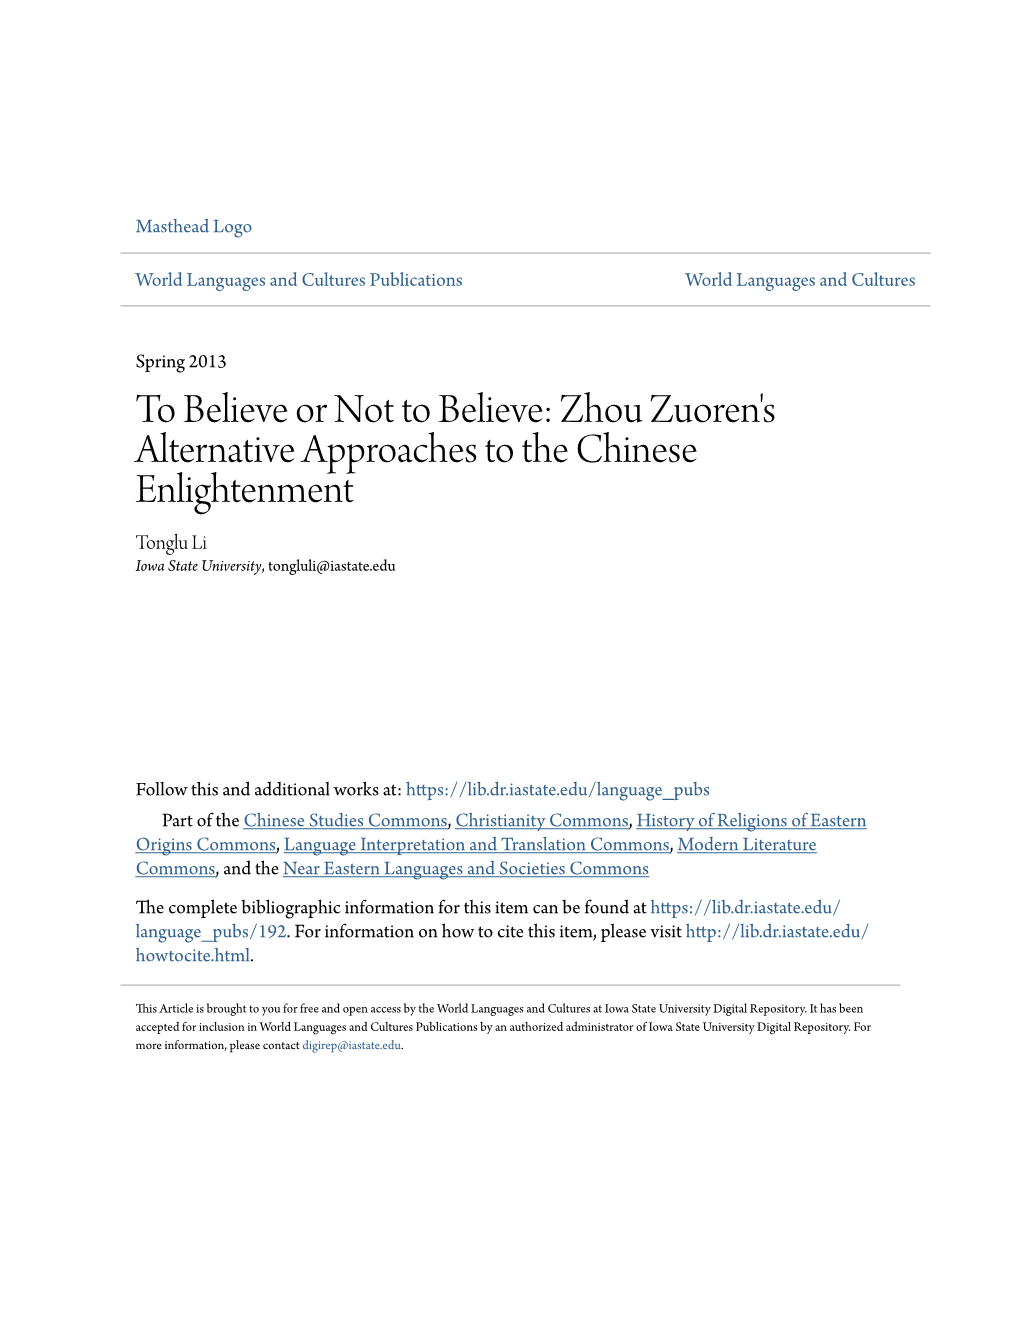 Zhou Zuoren's Alternative Approaches to the Chinese Enlightenment Tonglu Li Iowa State University, Tongluli@Iastate.Edu